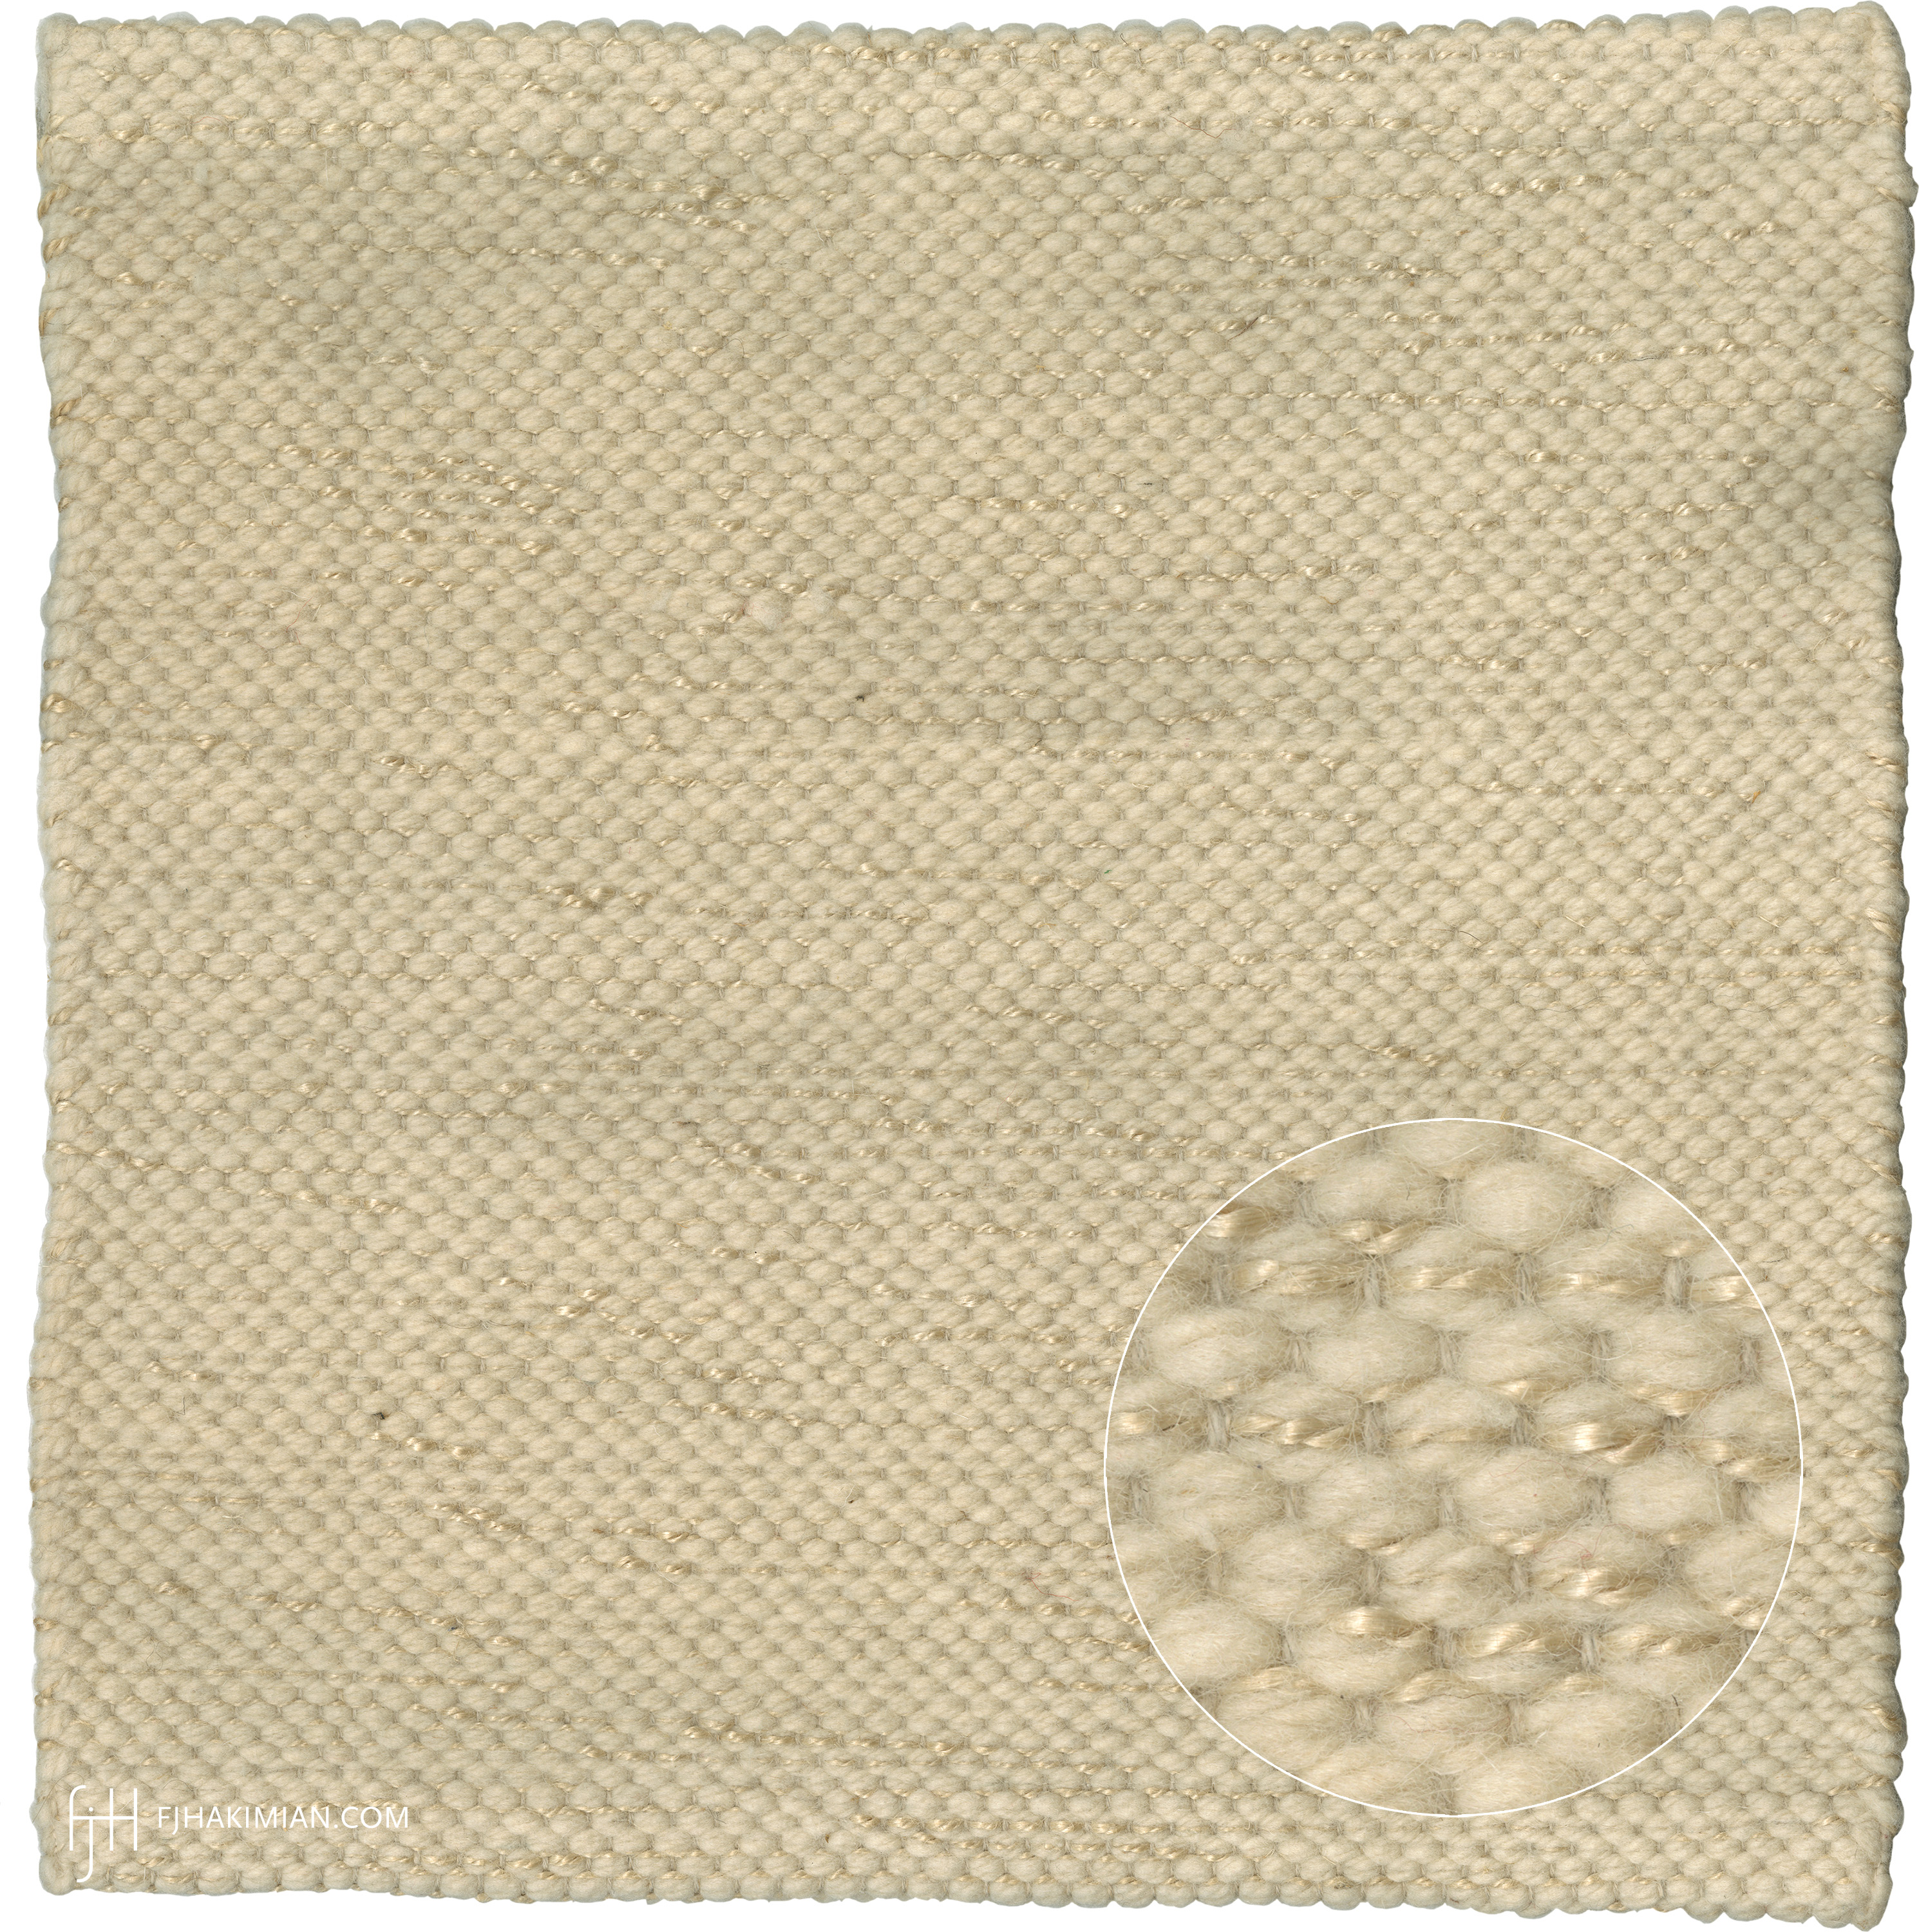 AB-HATLGLAB | Custom Spanish Carpet | FJ Hakimian | Carpet Gallery in NYC